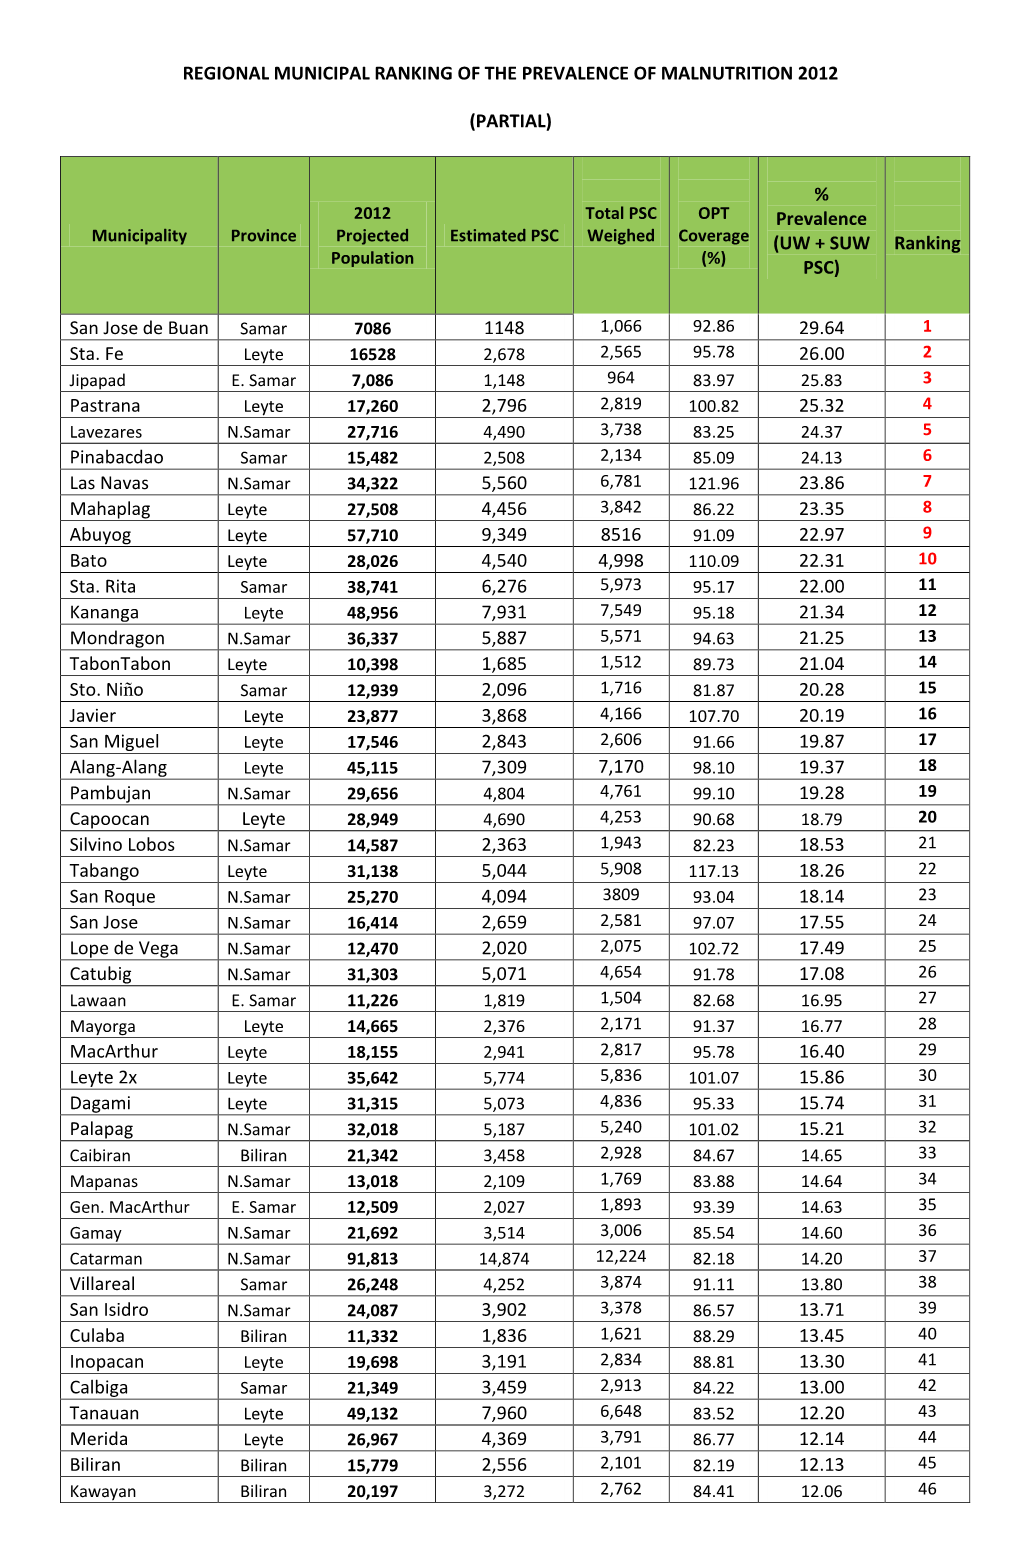 Regional Municipal Ranking of the Prevalence of Malnutrition 2012